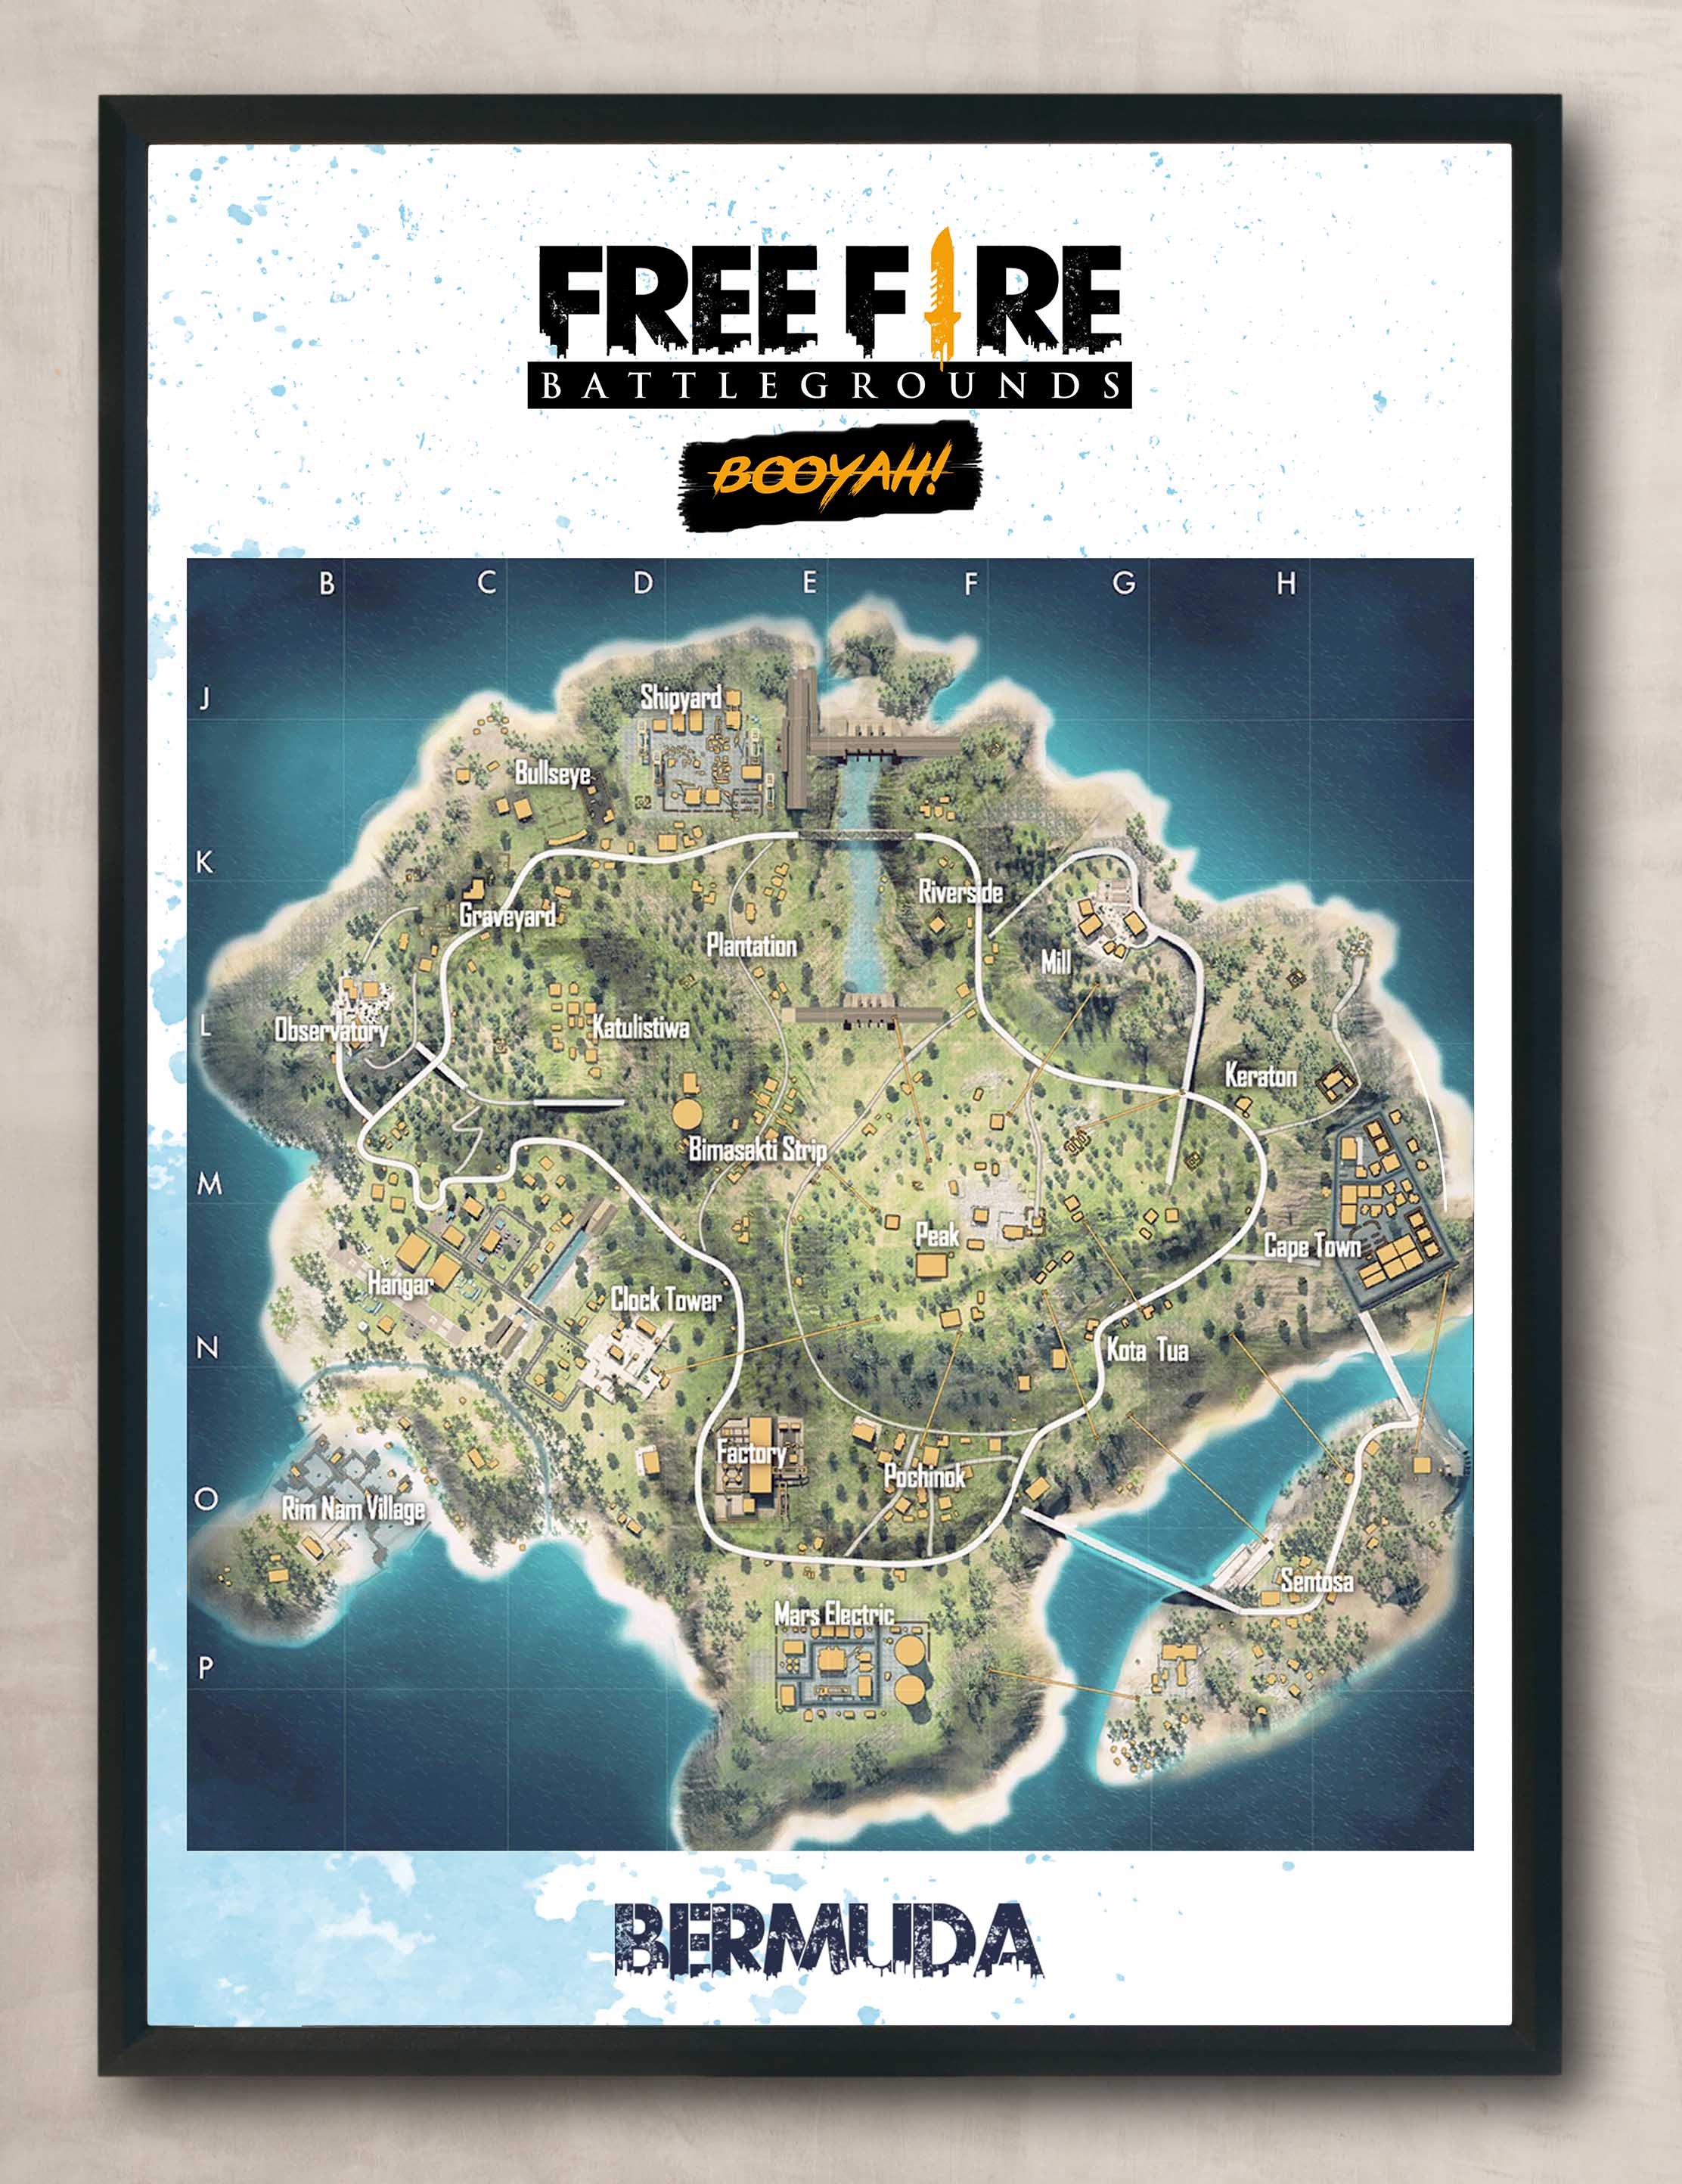 Free Fire FF Peta Bermuda Map Poster HD Booyah Ukuran A3 Lazada Indonesia